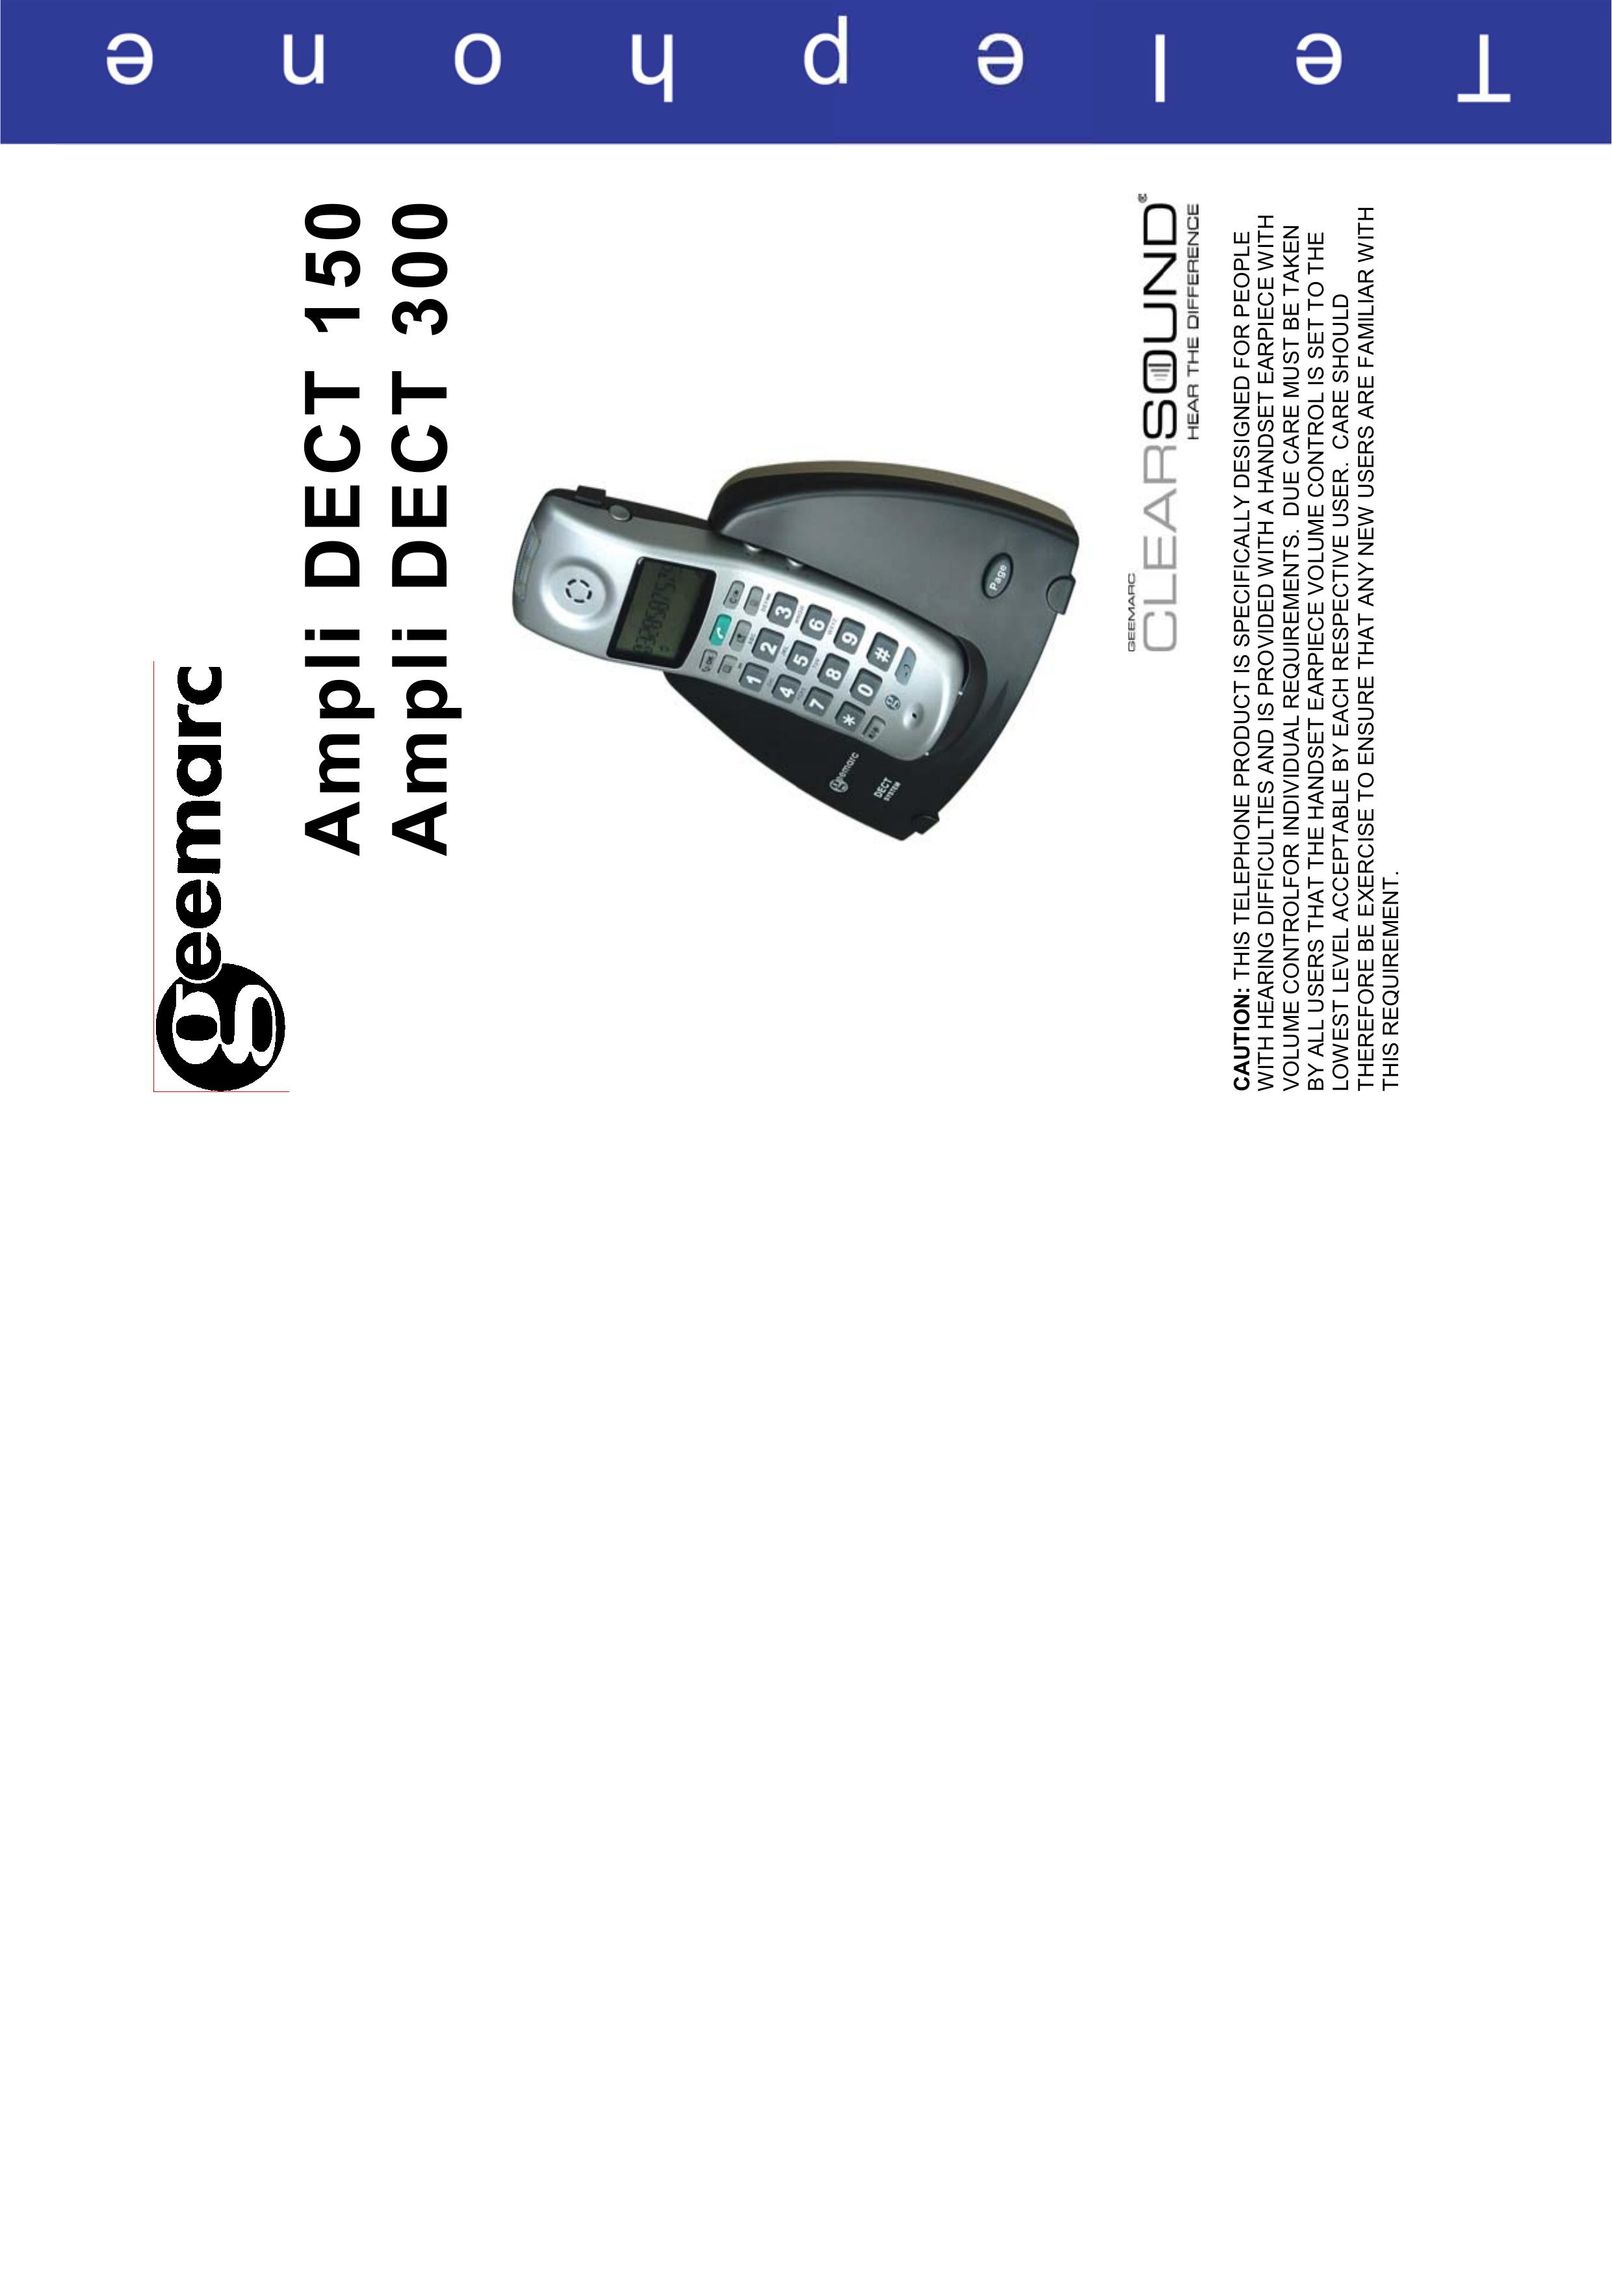 Geemarc Dect 150 Cordless Telephone User Manual